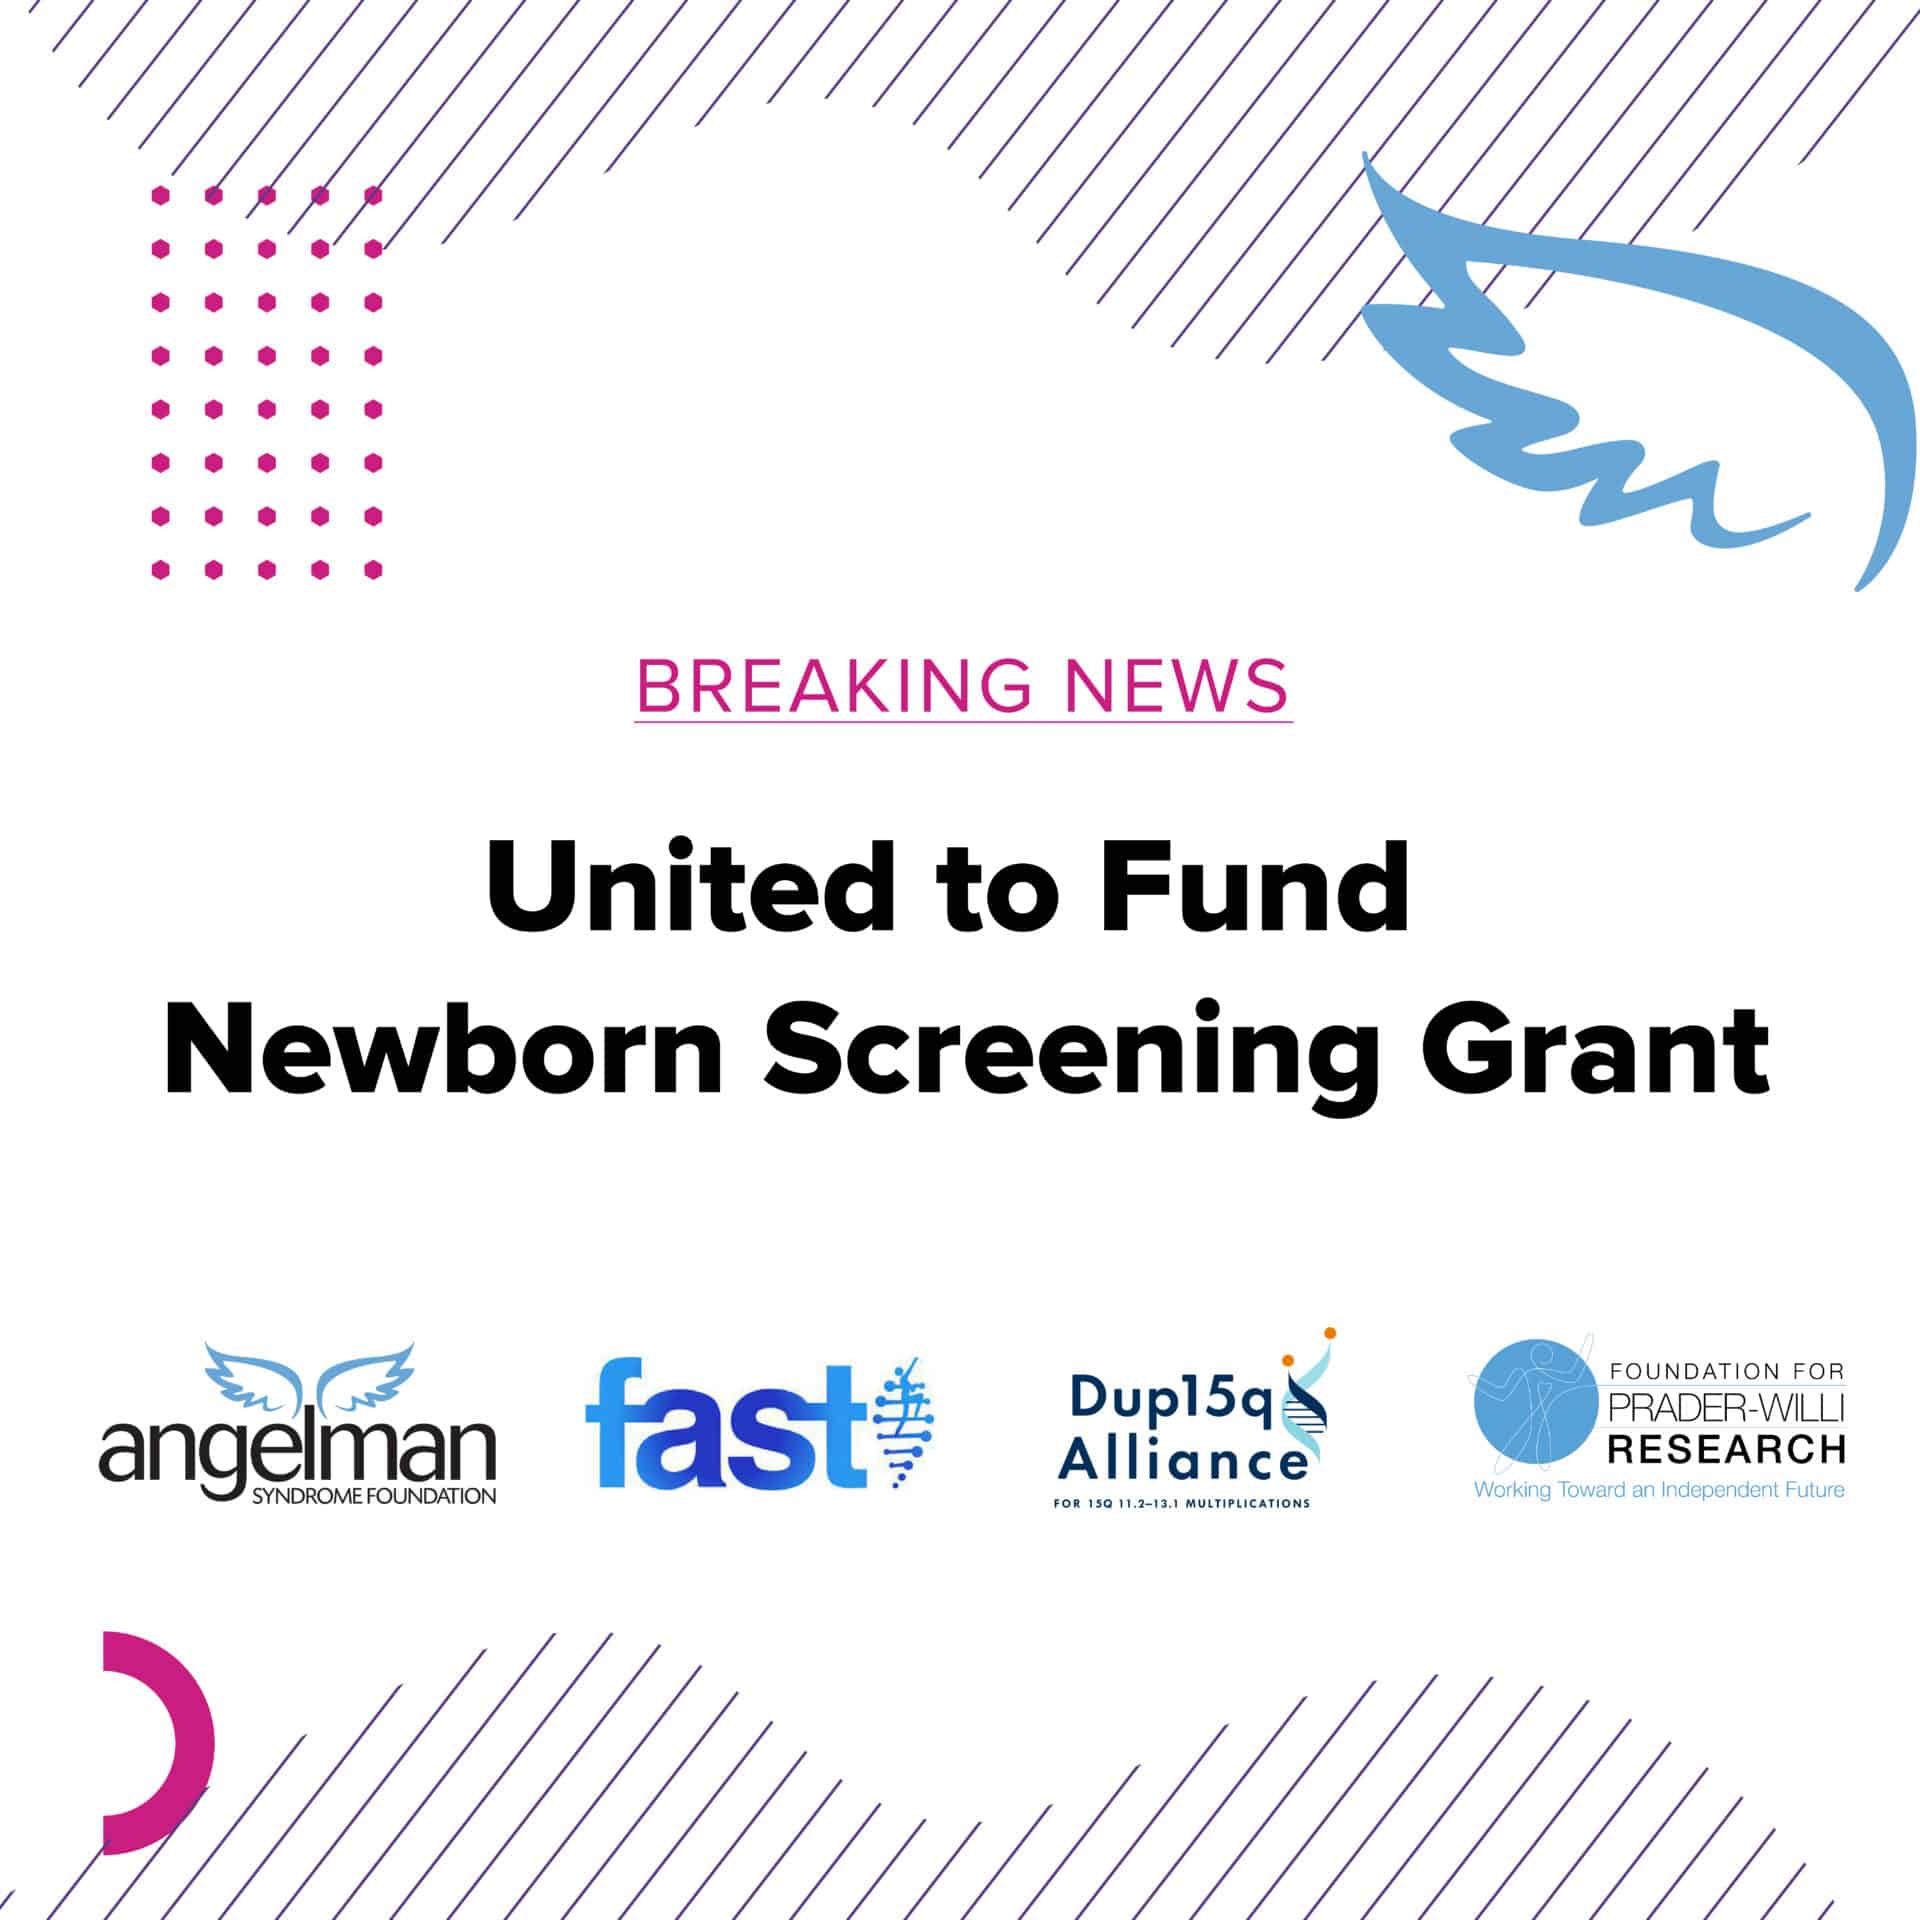 United to Fund Newborn Screening Grant